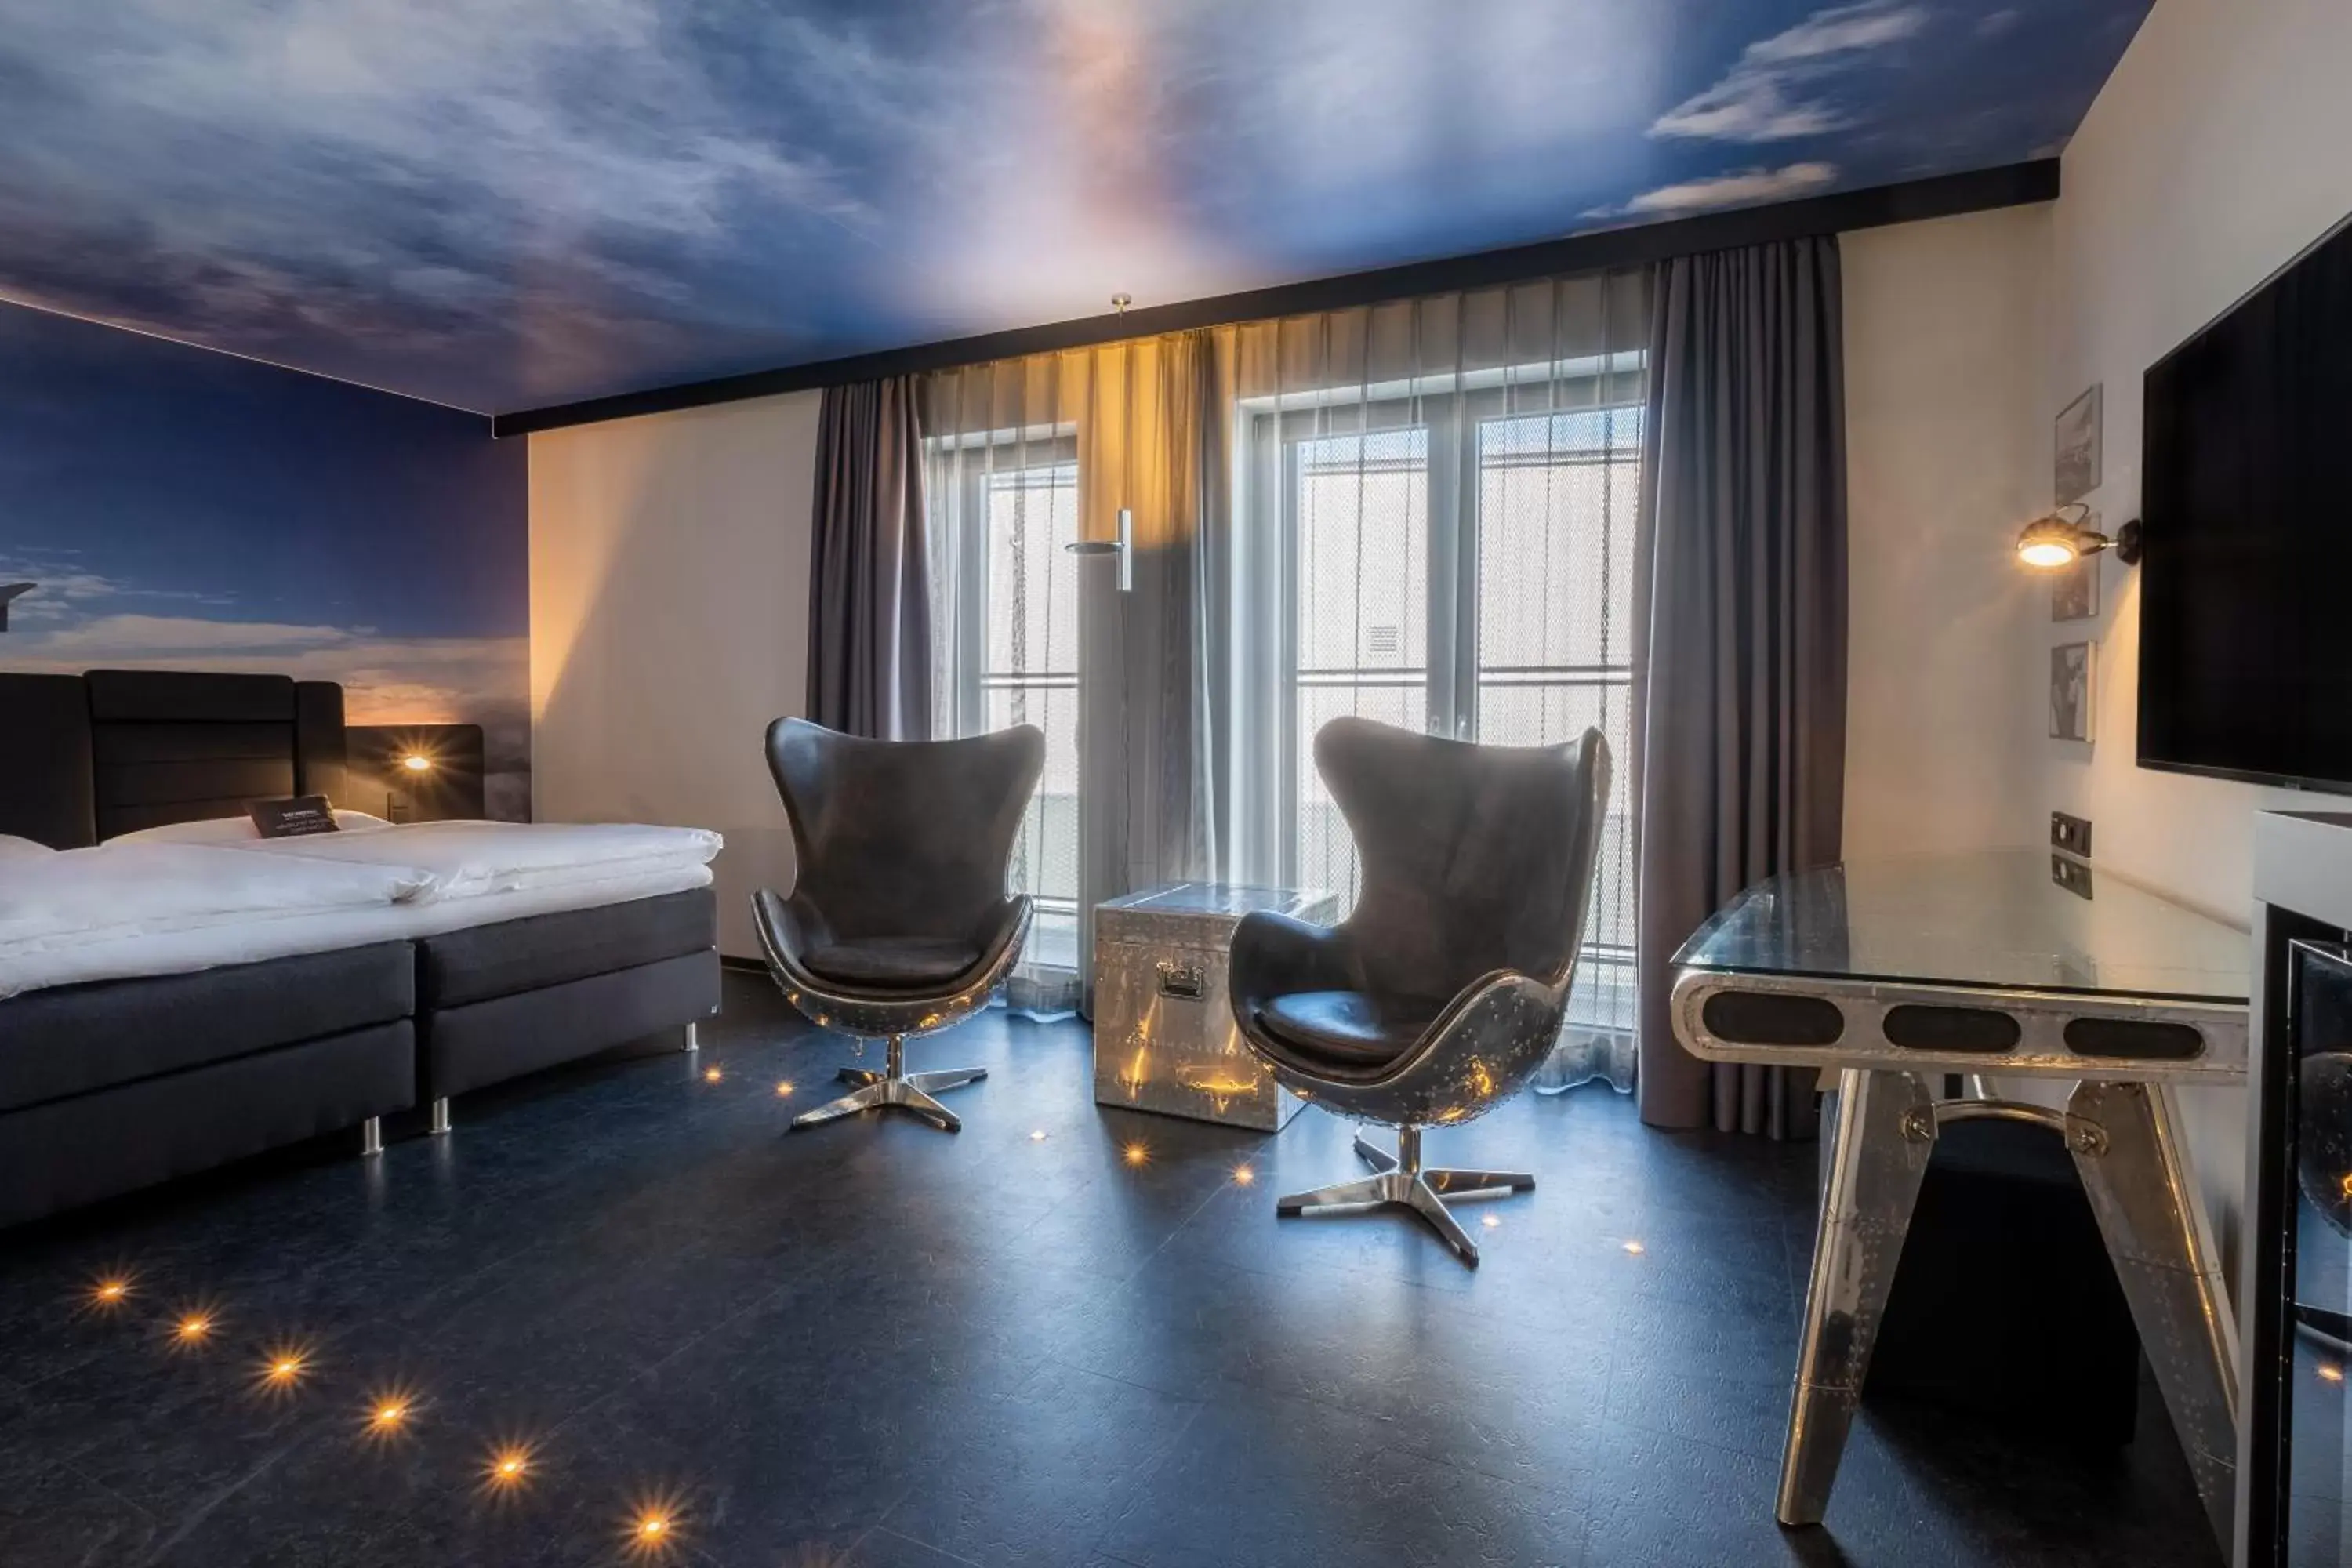 Photo of the whole room in V8 Hotel Köln at MOTORWORLD